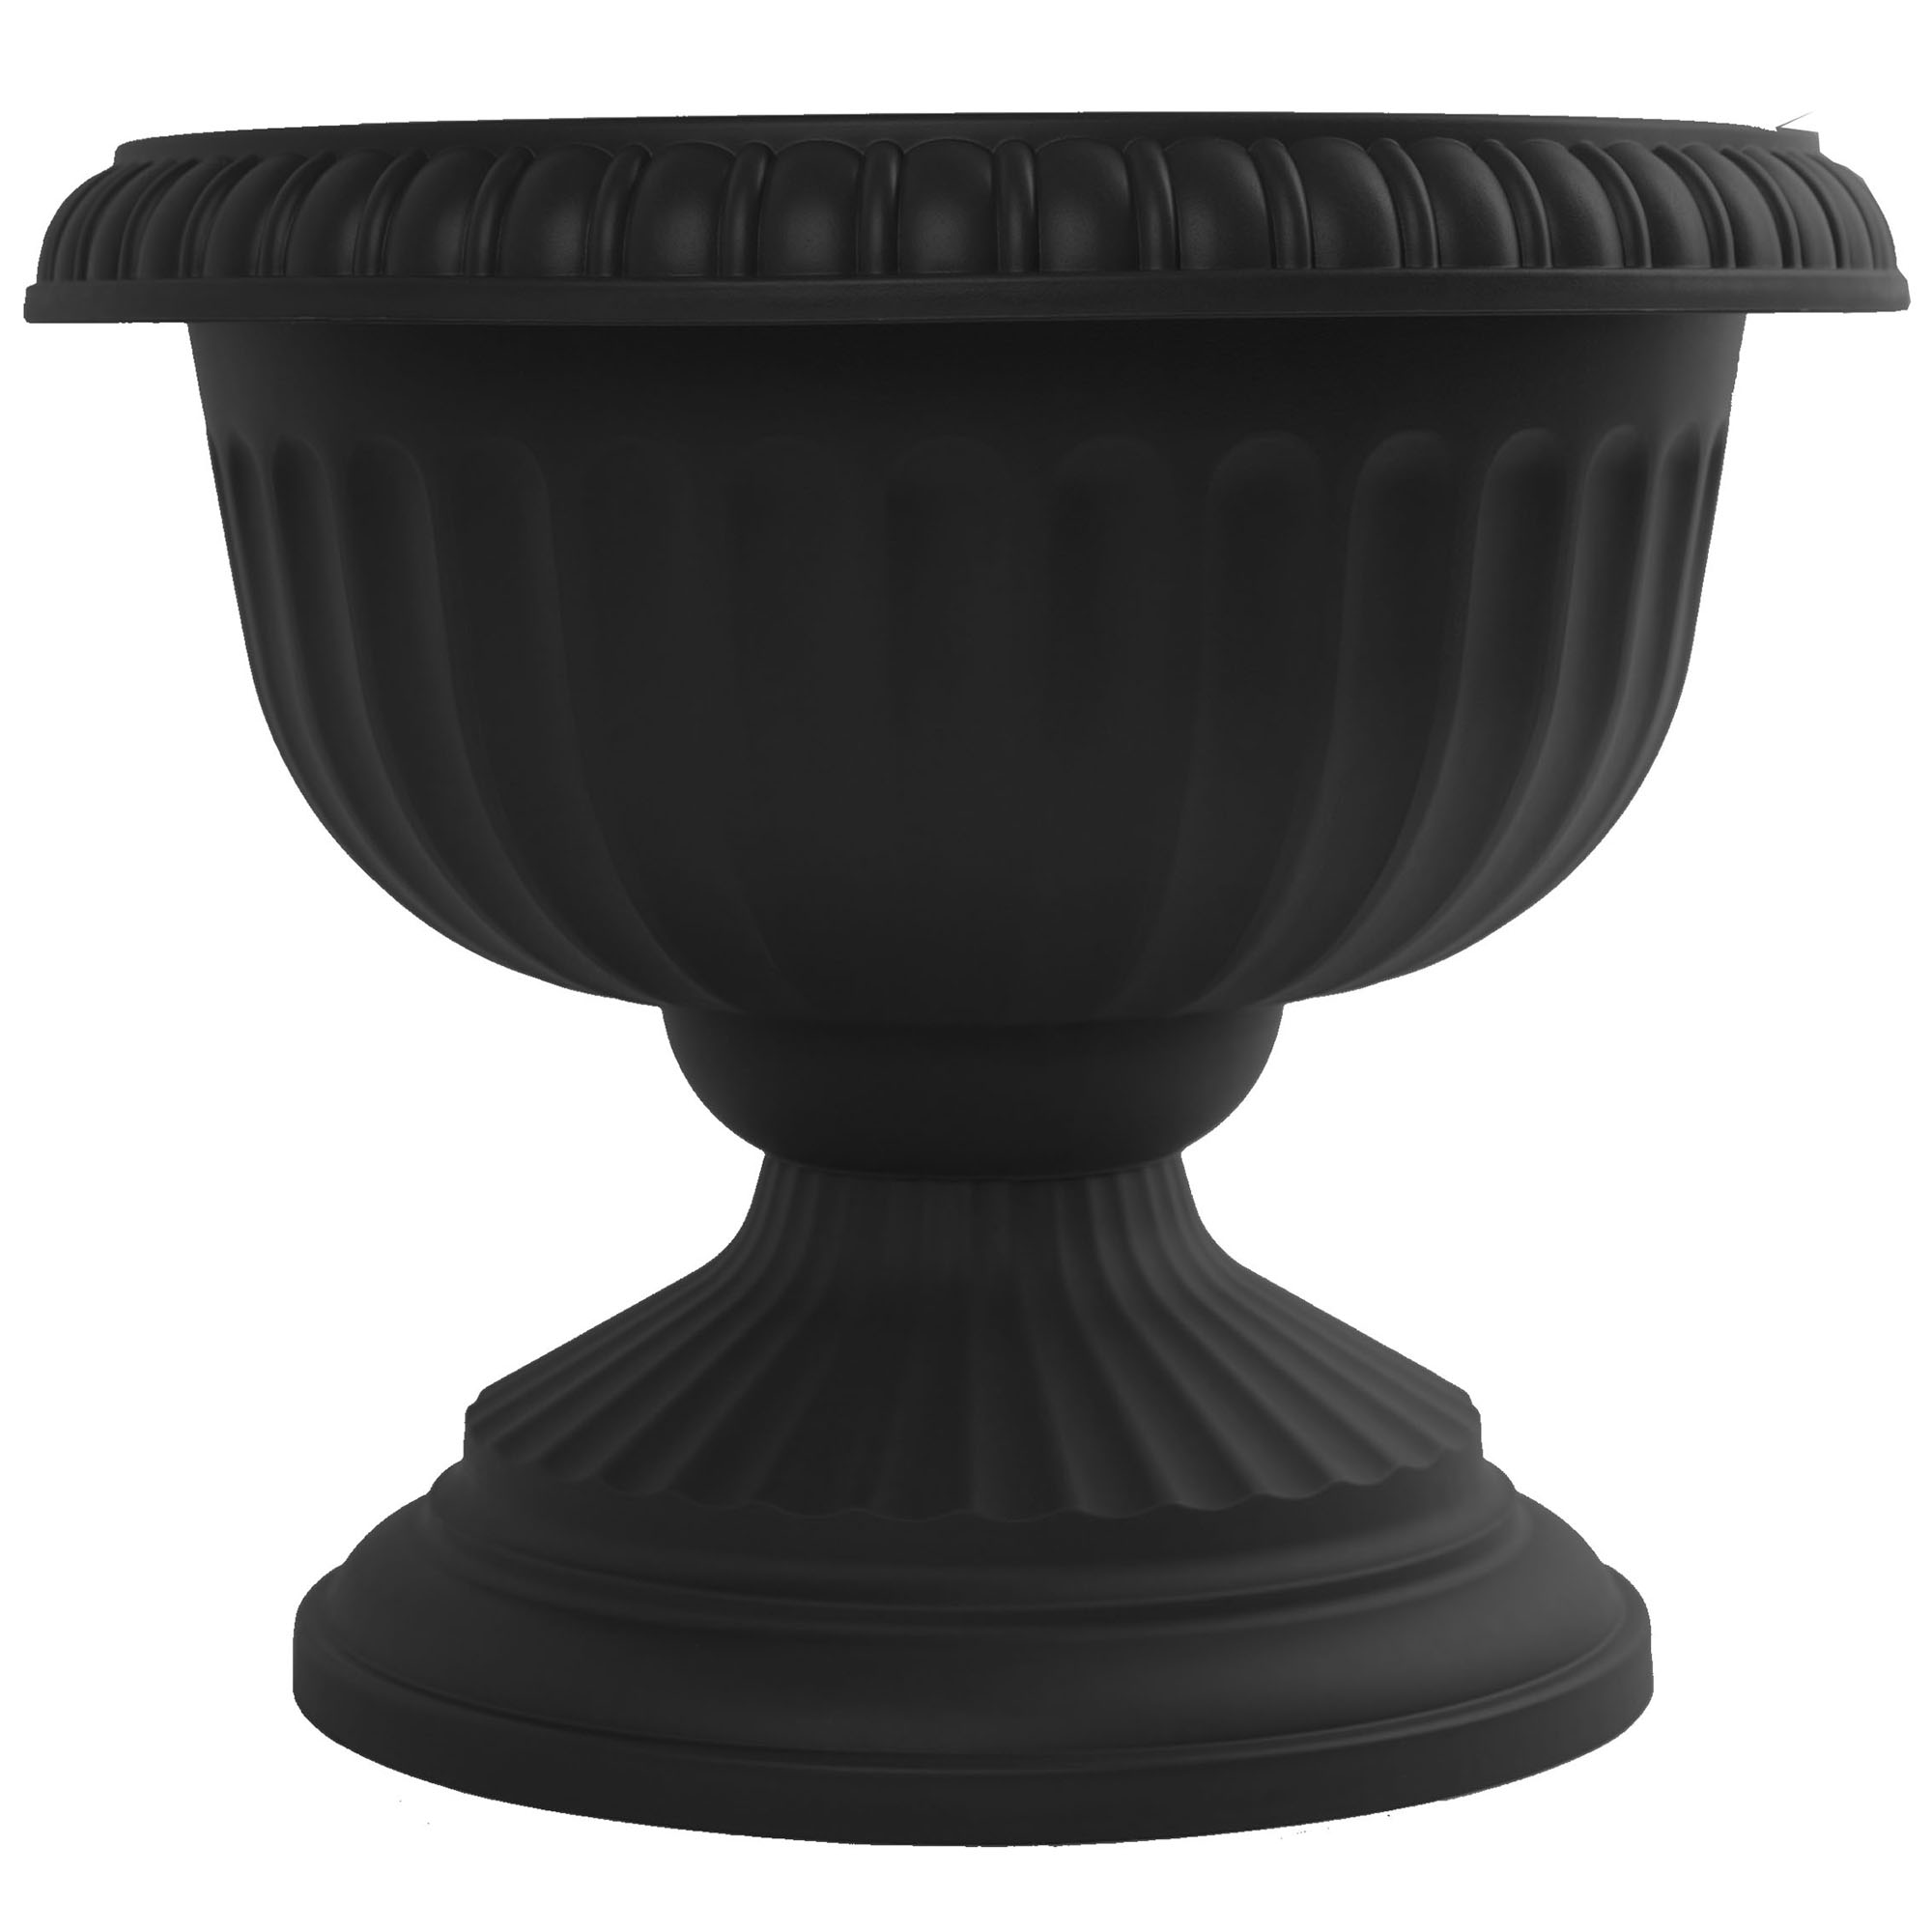 Bloem Grecian Urn Planter 12 inch Black, Size: 10.5